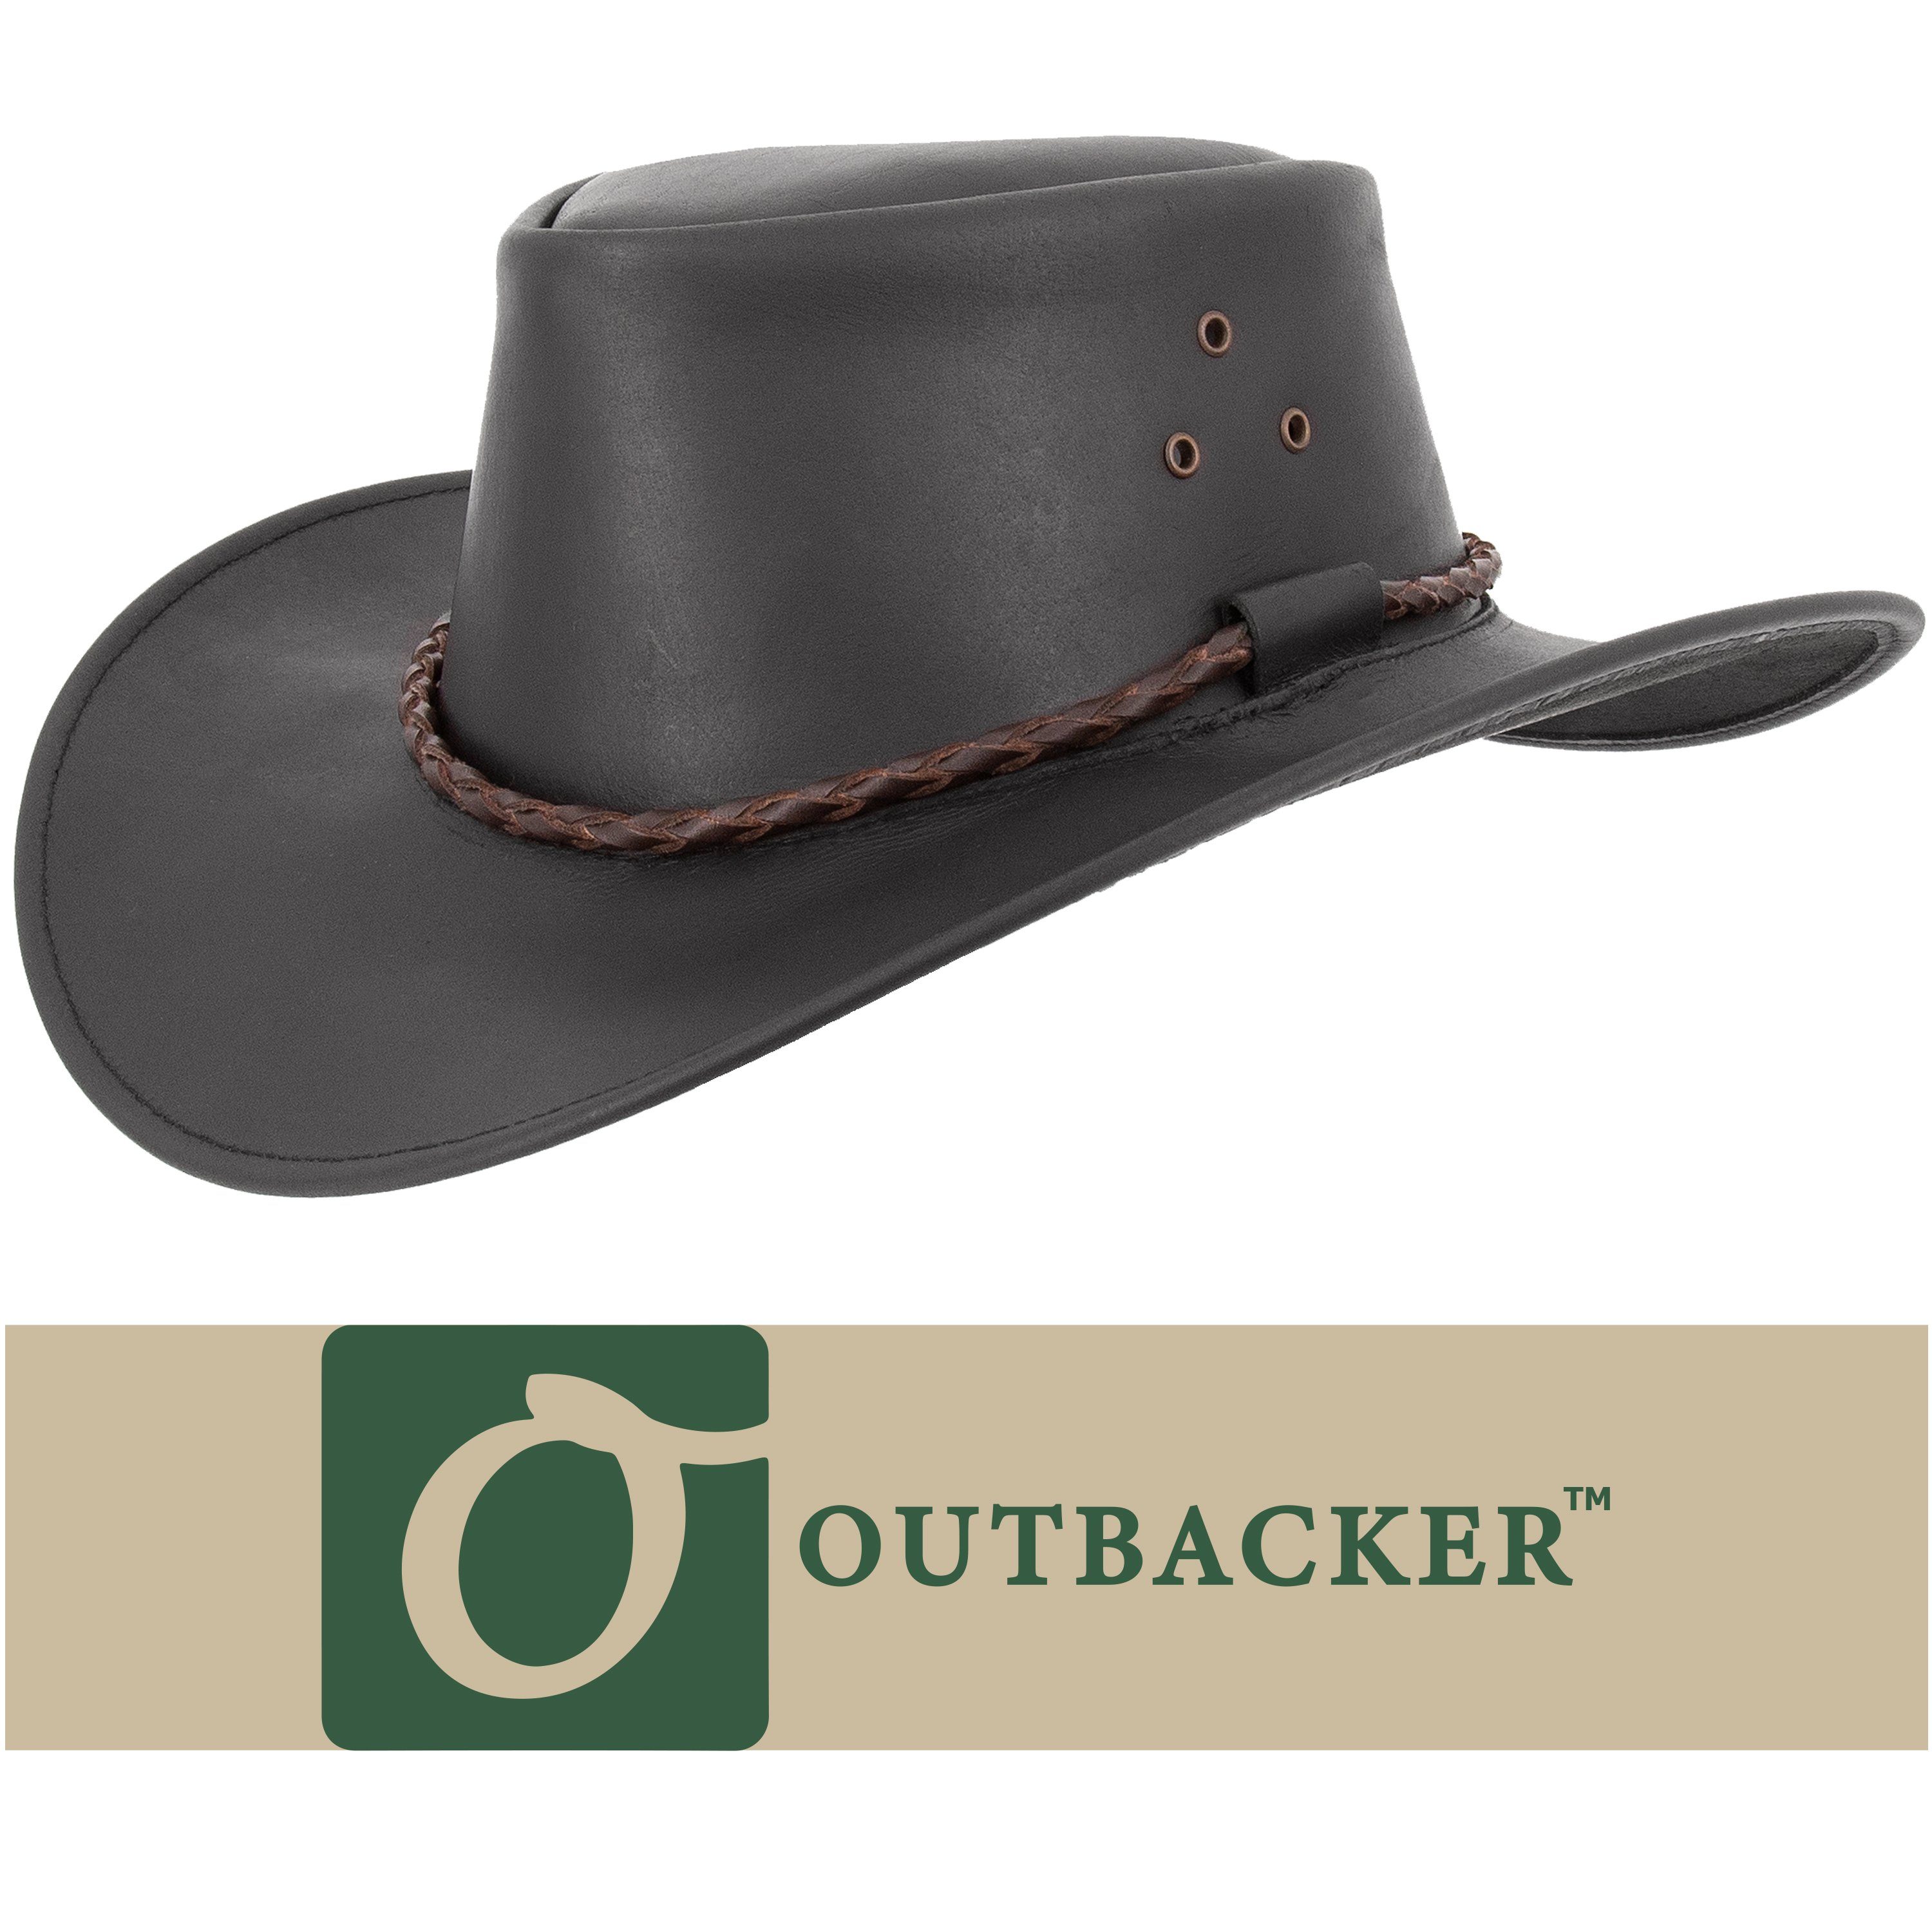 Schwarz Outdoor Outback-Hut Kinnband mit Outbacker Cowboyhut allwettertauglich Lederhut